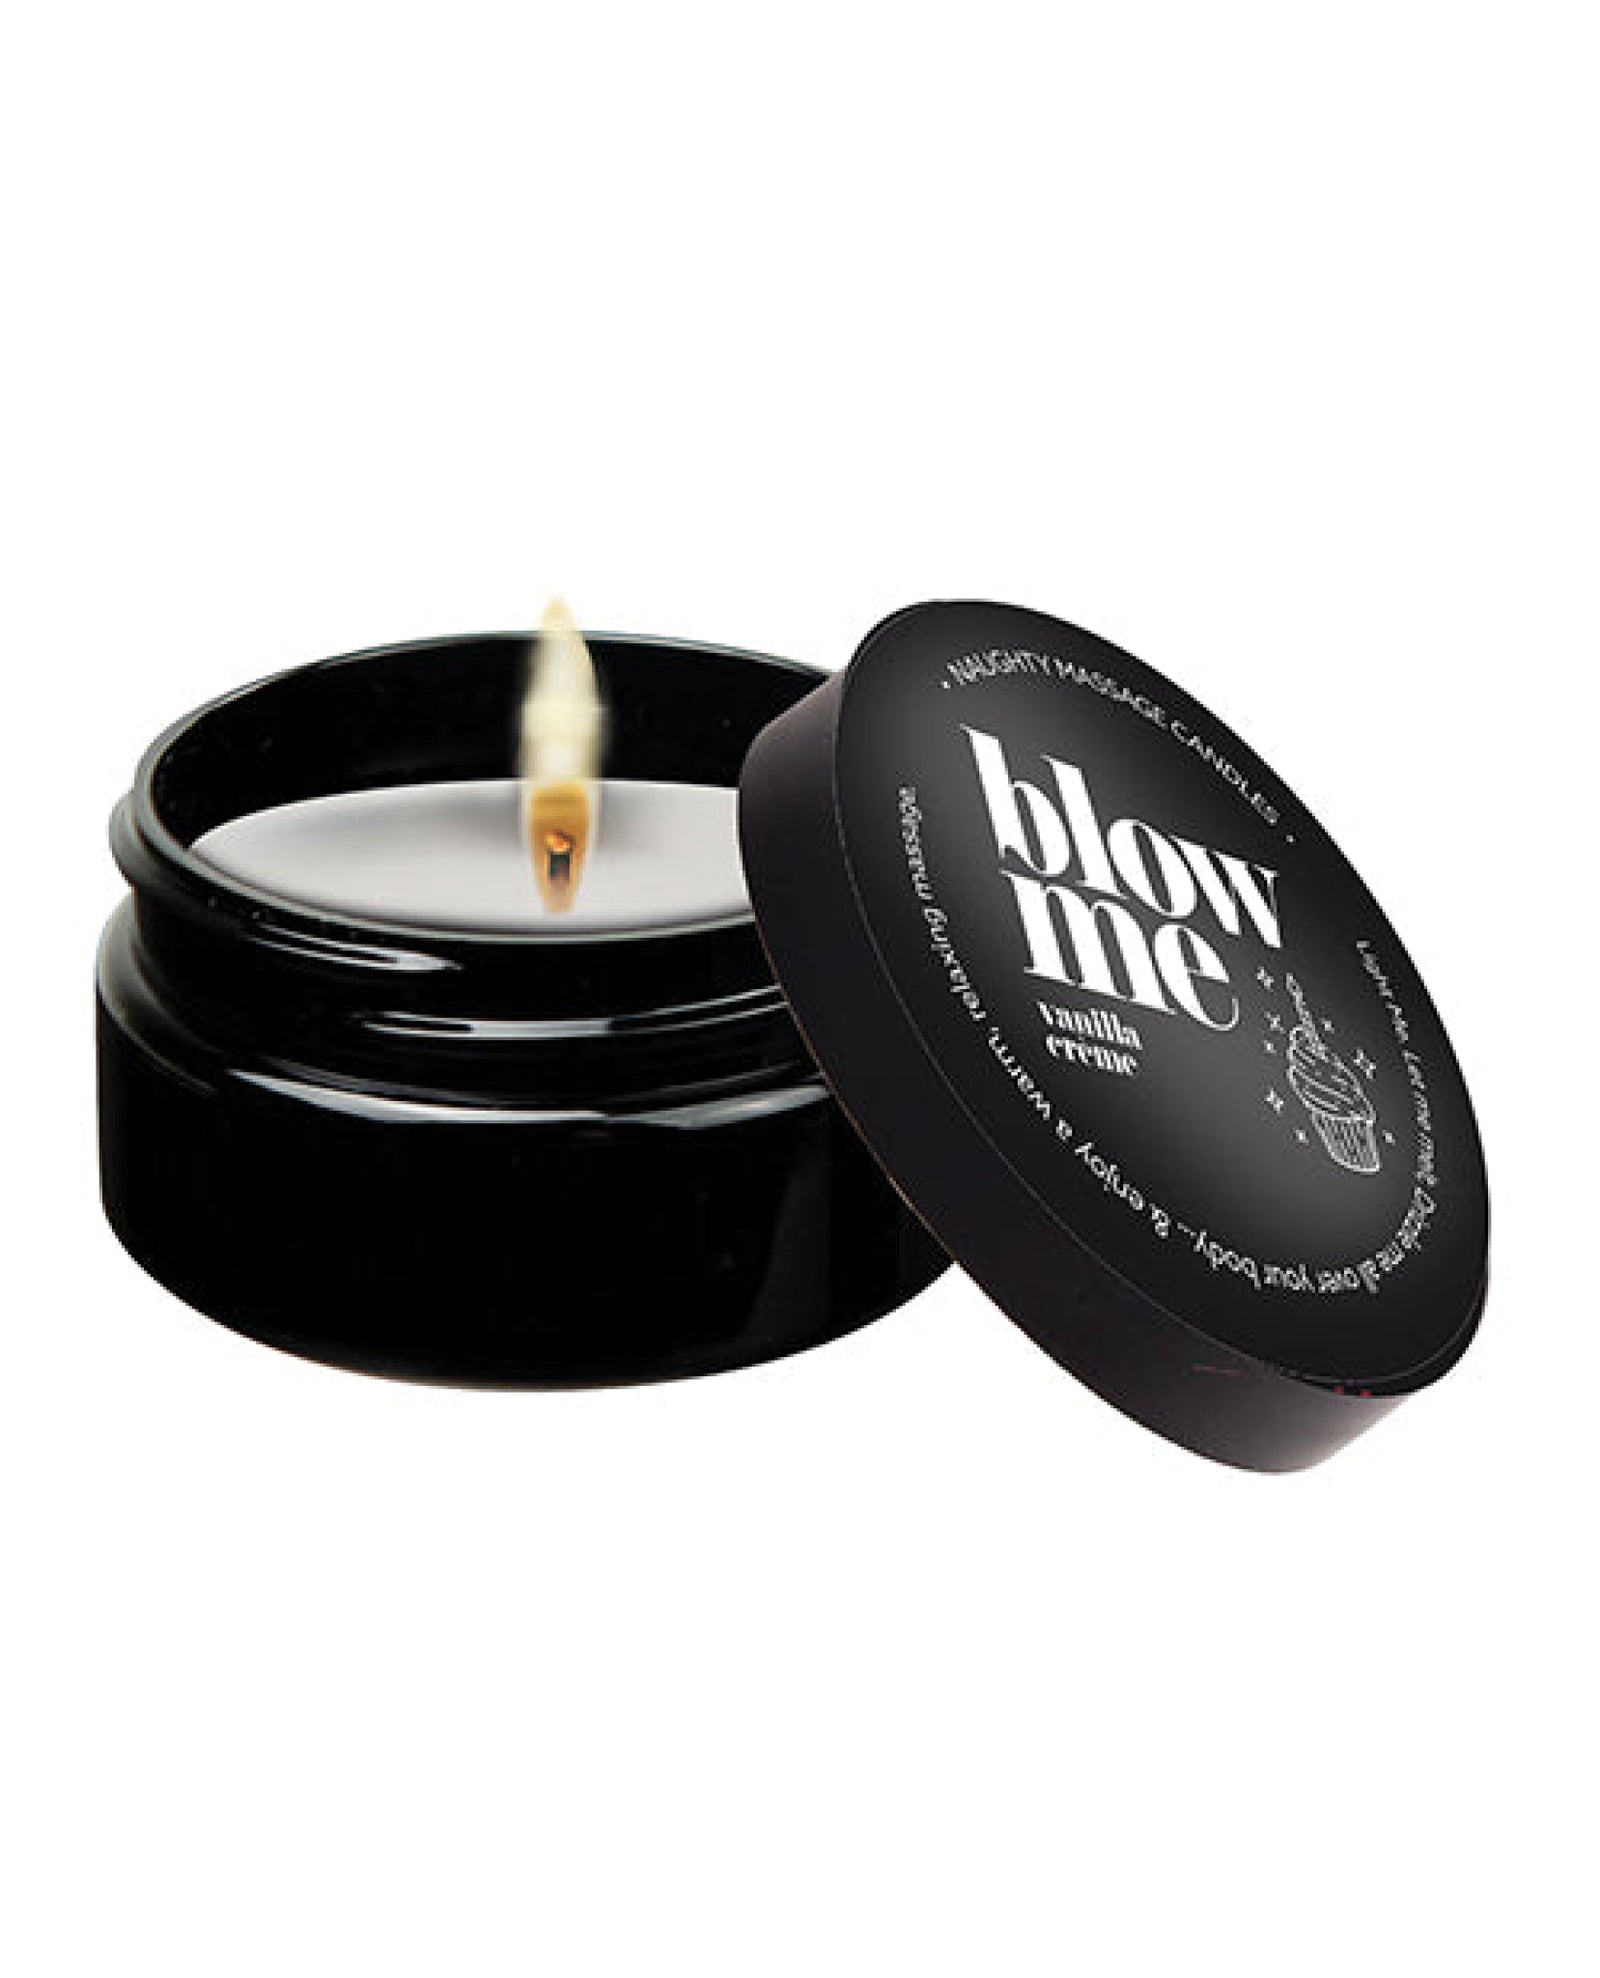 Kama Sutra Mini Massage Candle - 2 Oz Blow Me Kama Sutra